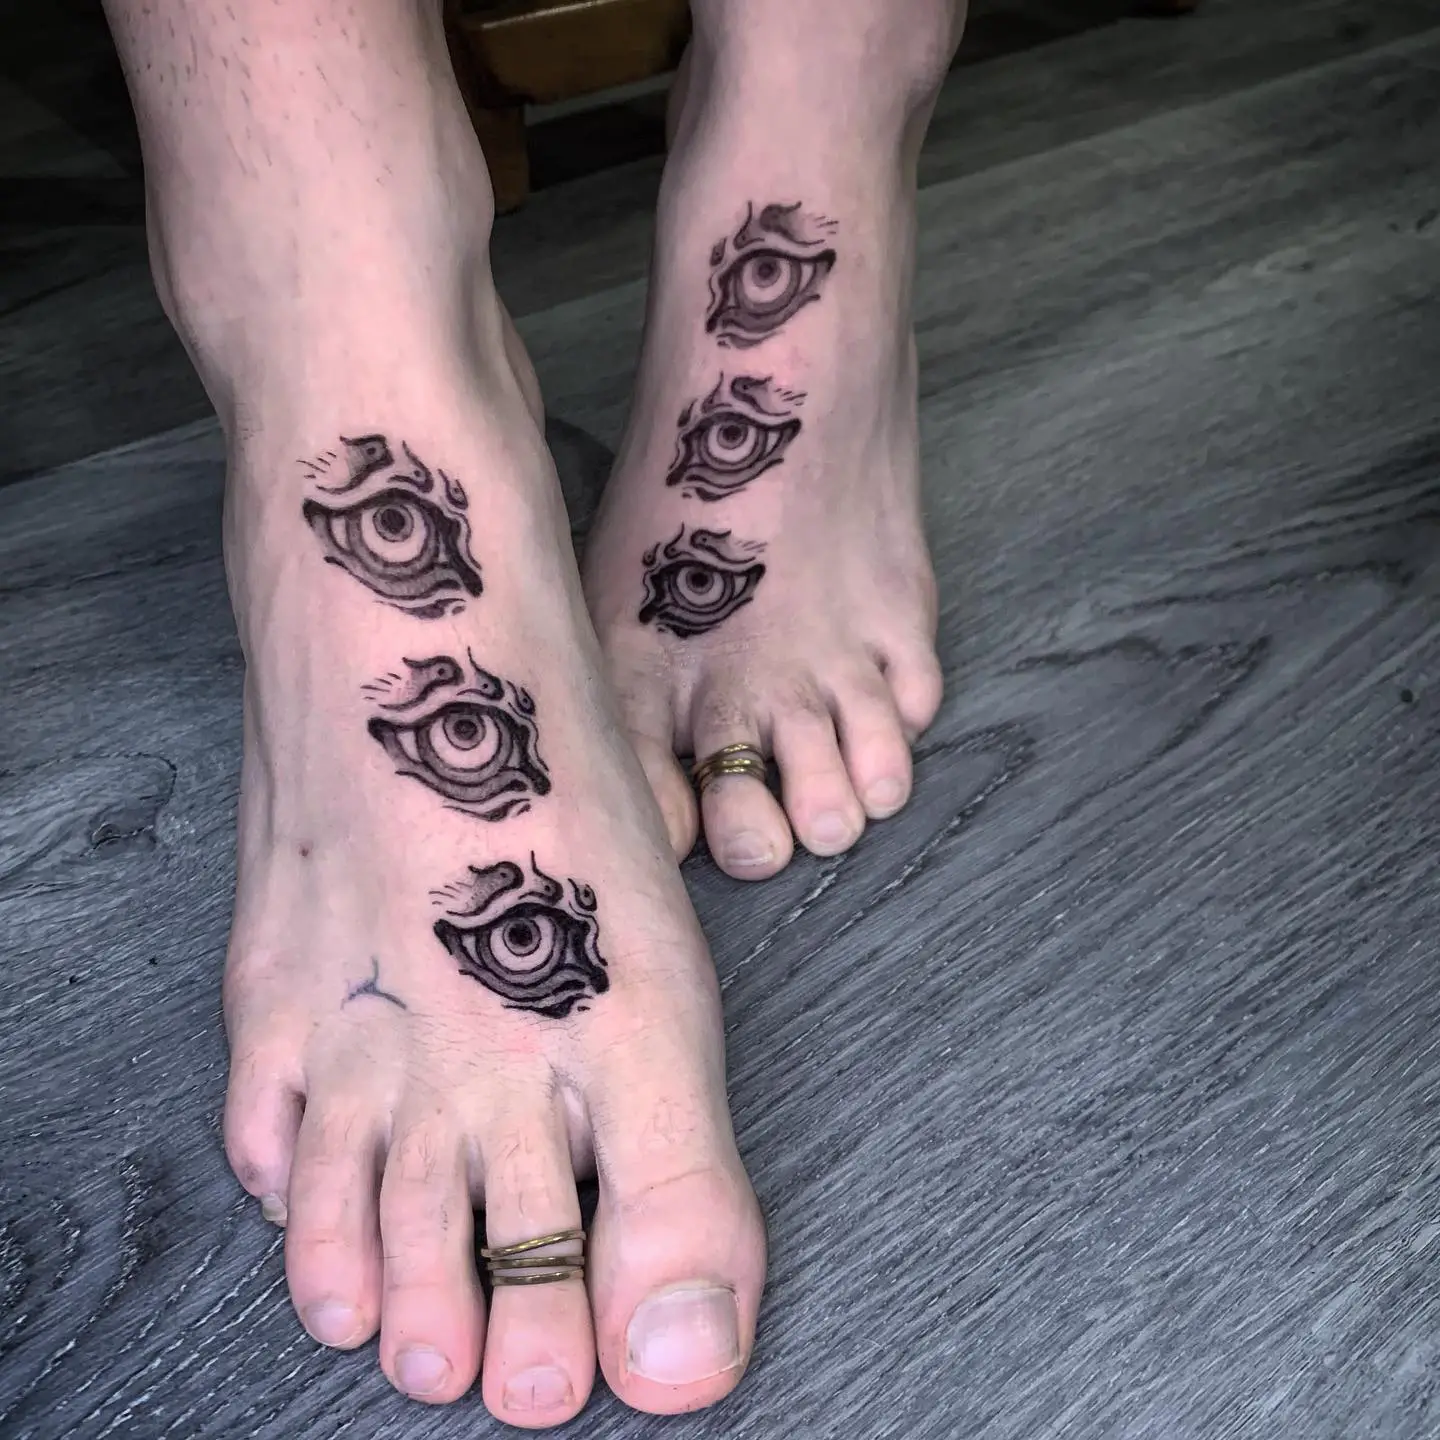 Unique feet tattoos by kudan tattoo